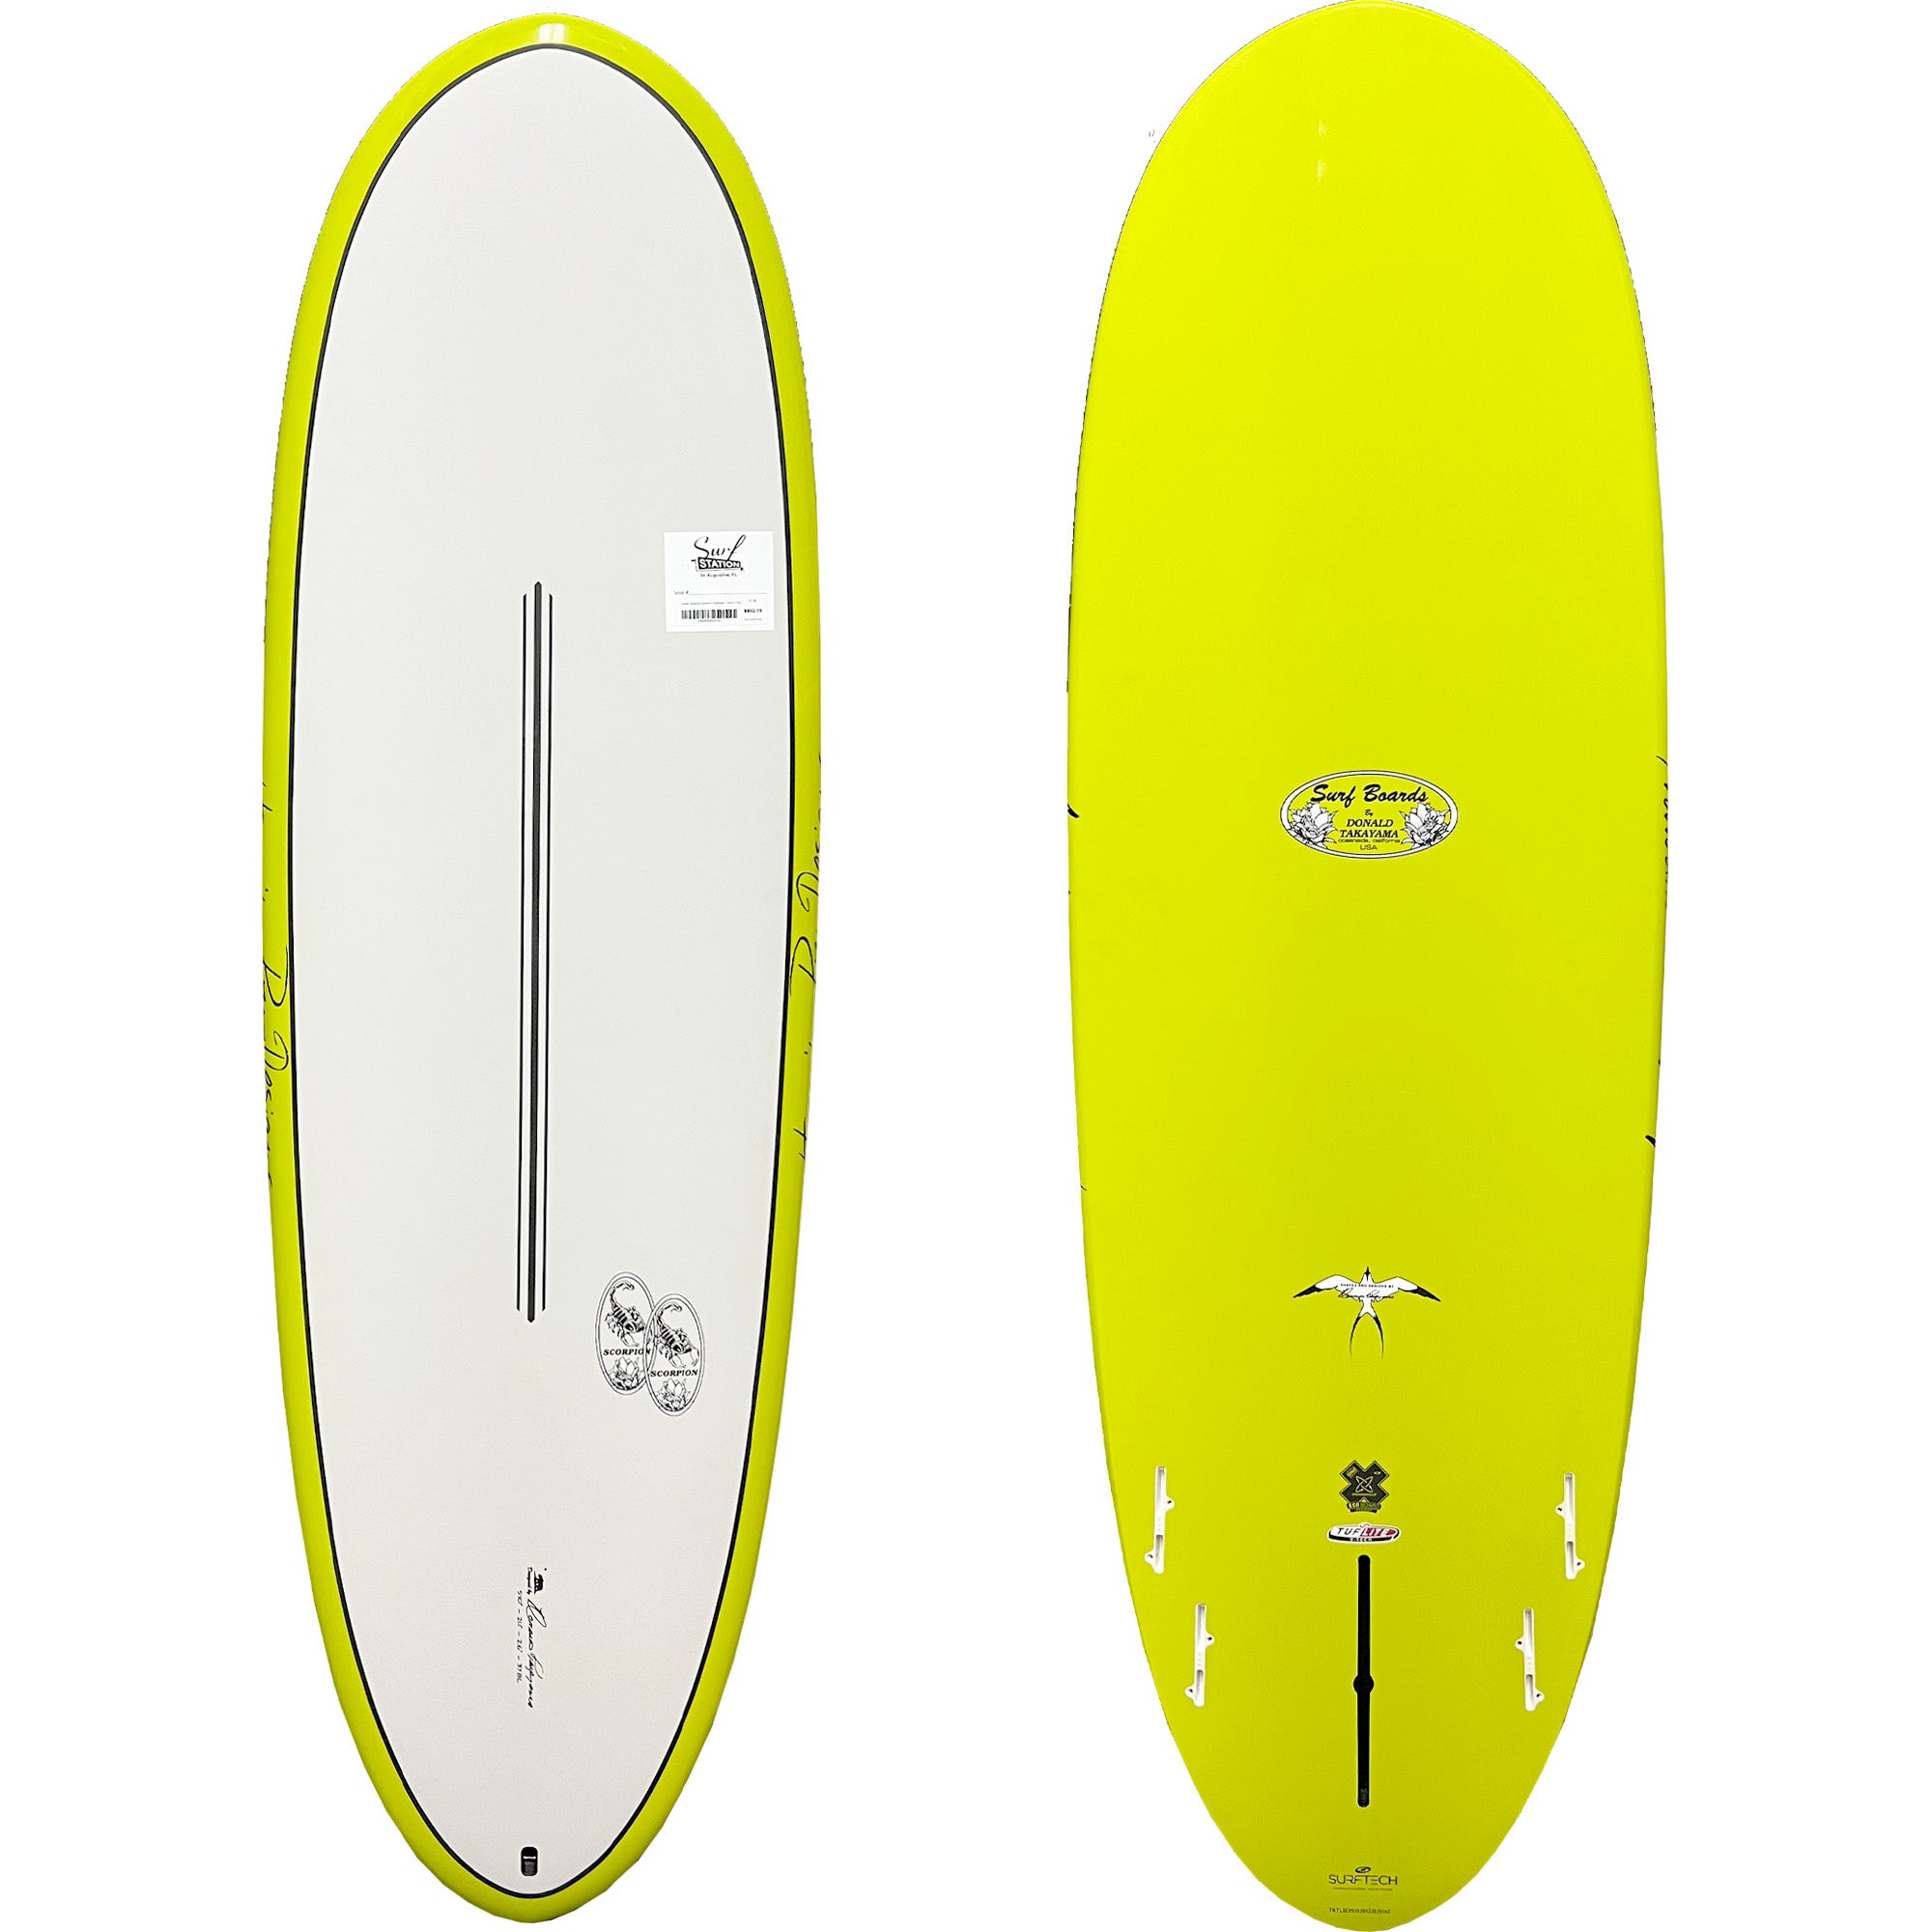 Takayama Scorpion II Surfboard - TufLite V-Tech